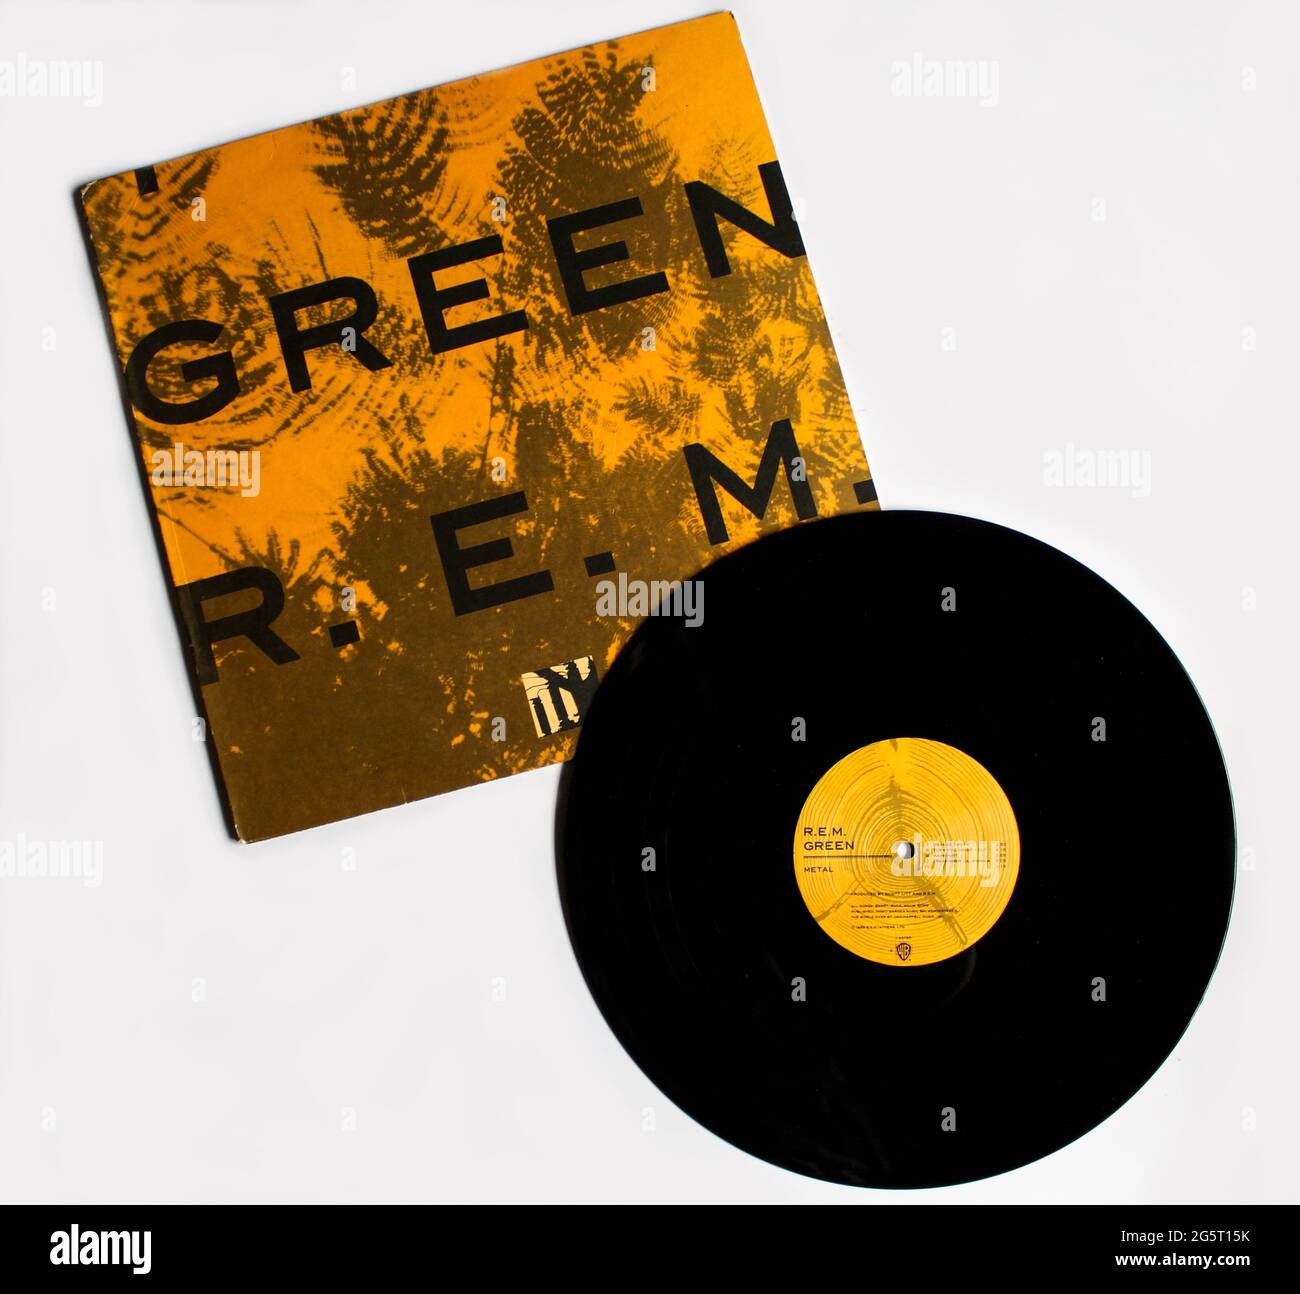 Alternative rock band, R.E.M. REM music album on vinyl record LP disc. Titled: Green album cover Stock Photo